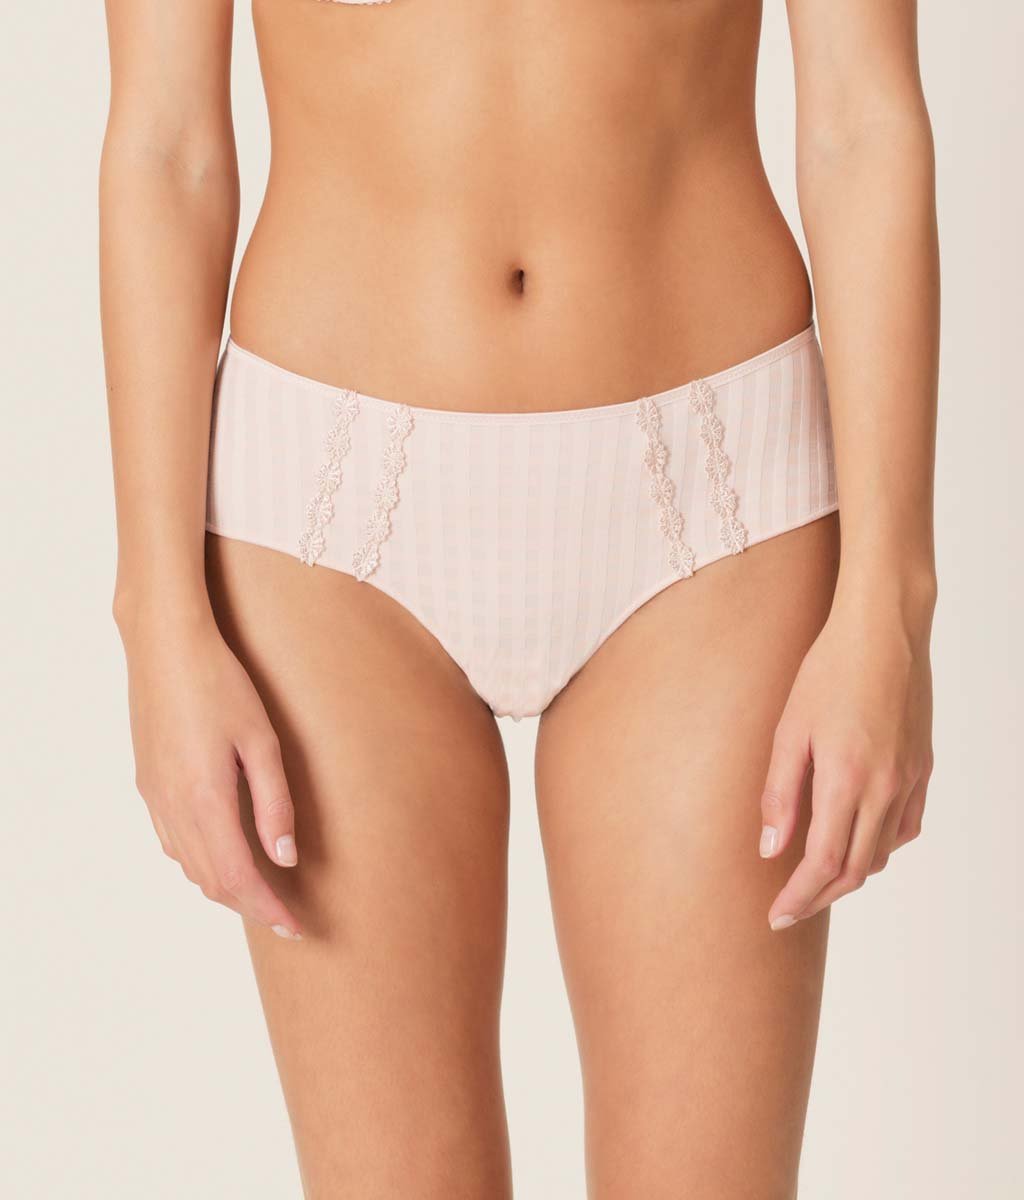 Marie Jo 'Avero' (Pearly Pink) Hotpants - Sandra Dee - Model Shot - Front